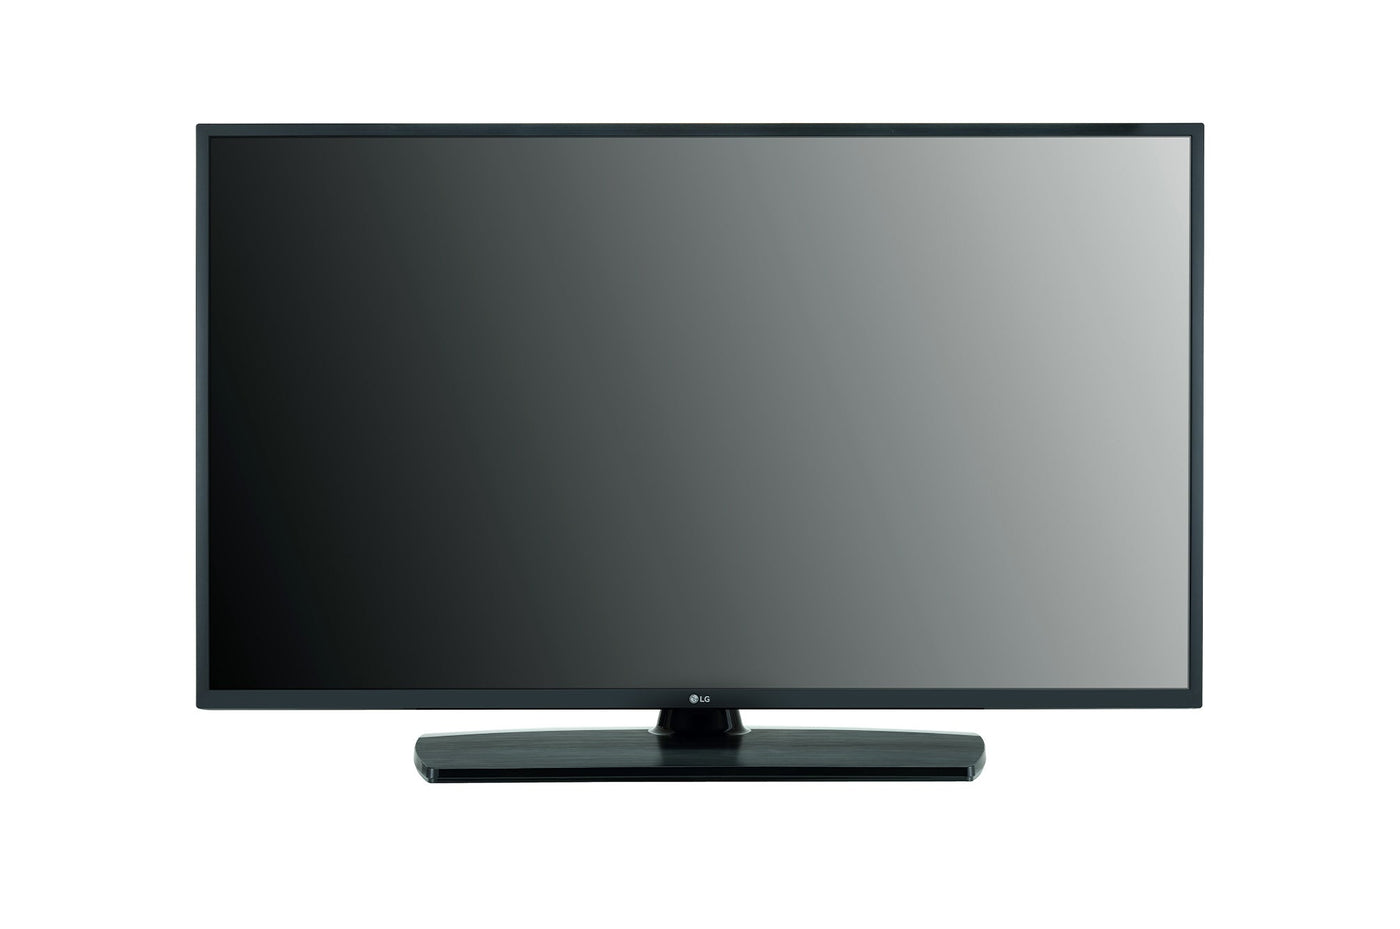 LG 50UM670H9 50" Pro:Centric Smart Hospitality 4K UHD TV with Slim Depth and Pro:Idiom Direct